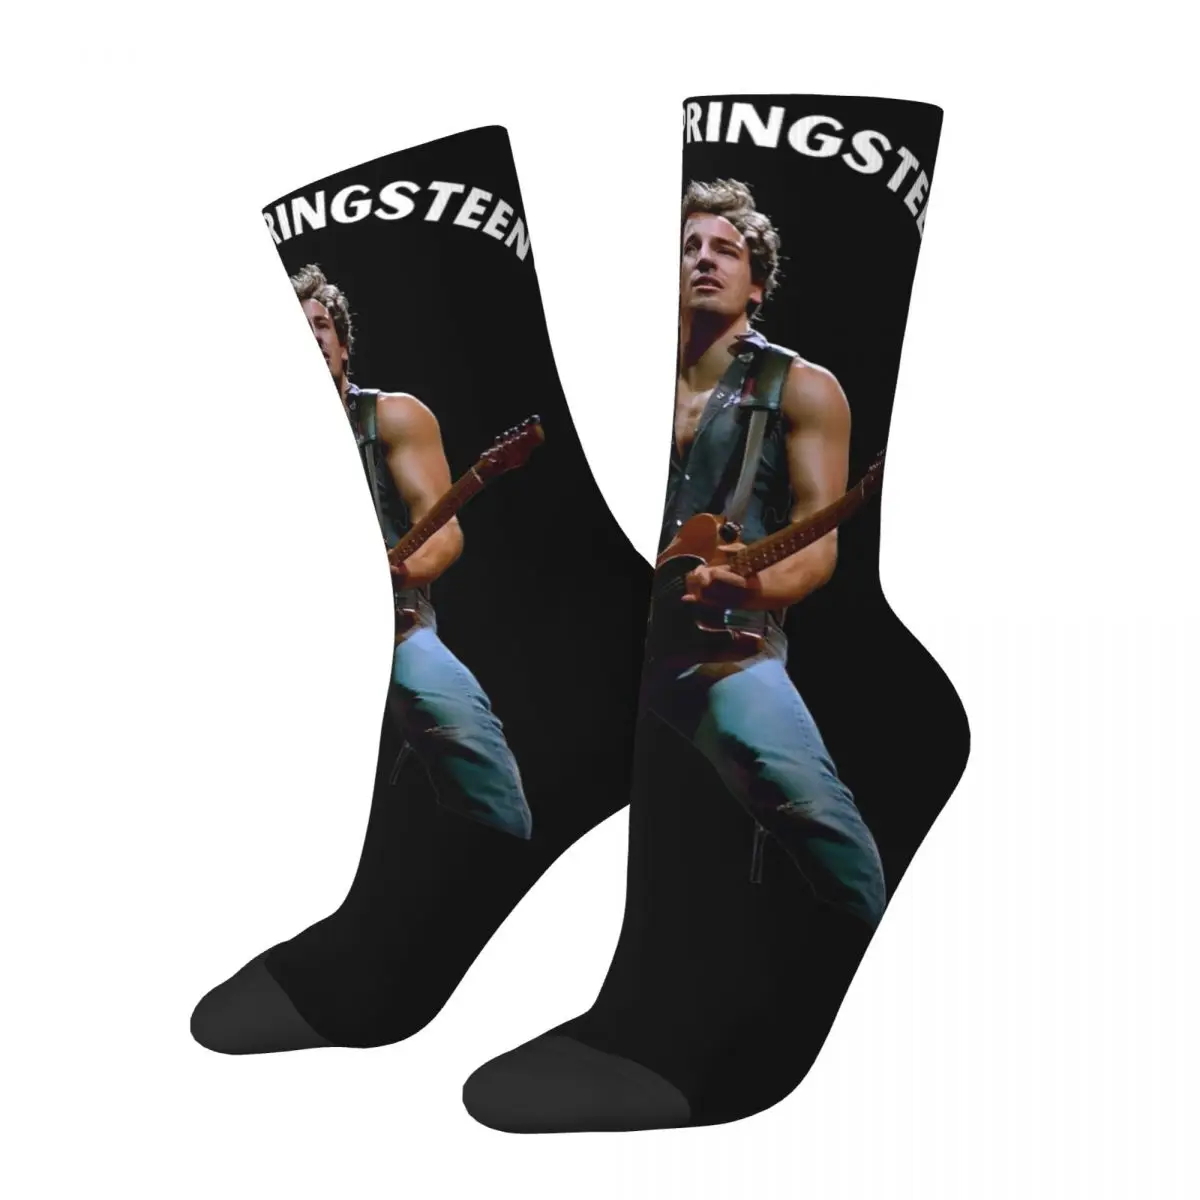 

Bruce Springsteen Rock Singer Theme Crew Socks Accessories for Female Male Cozy Dress Socks